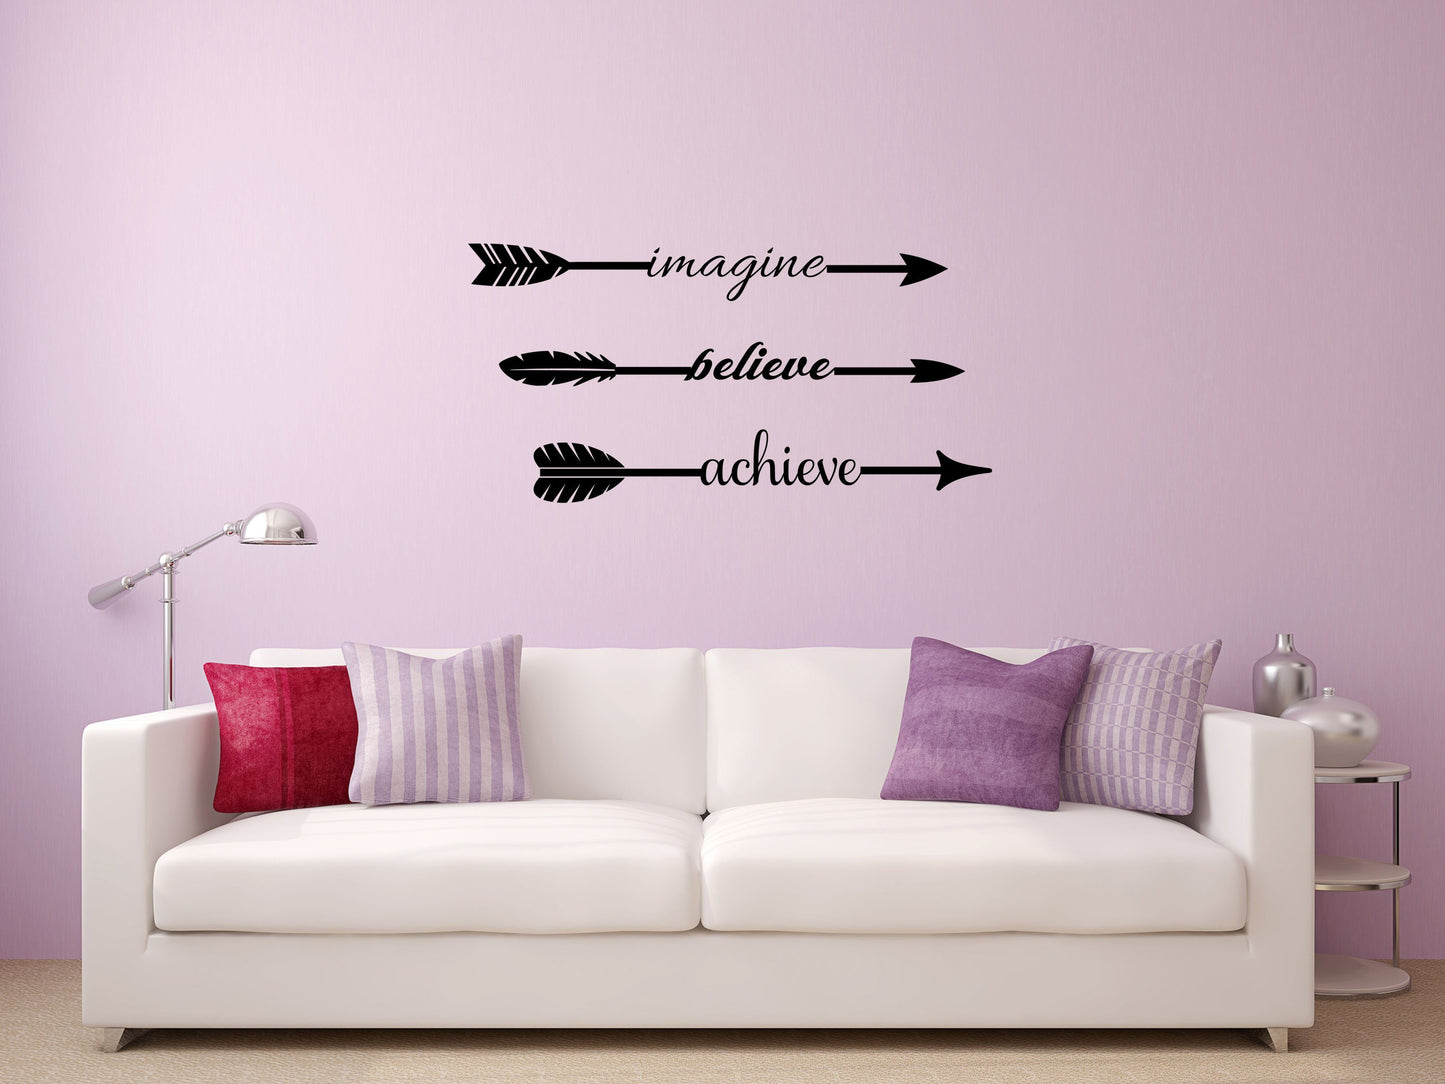 Imagine Believe Achieve - Inspirational Wall Decals Vinyl Wall Decal Inspirational Wall Signs 